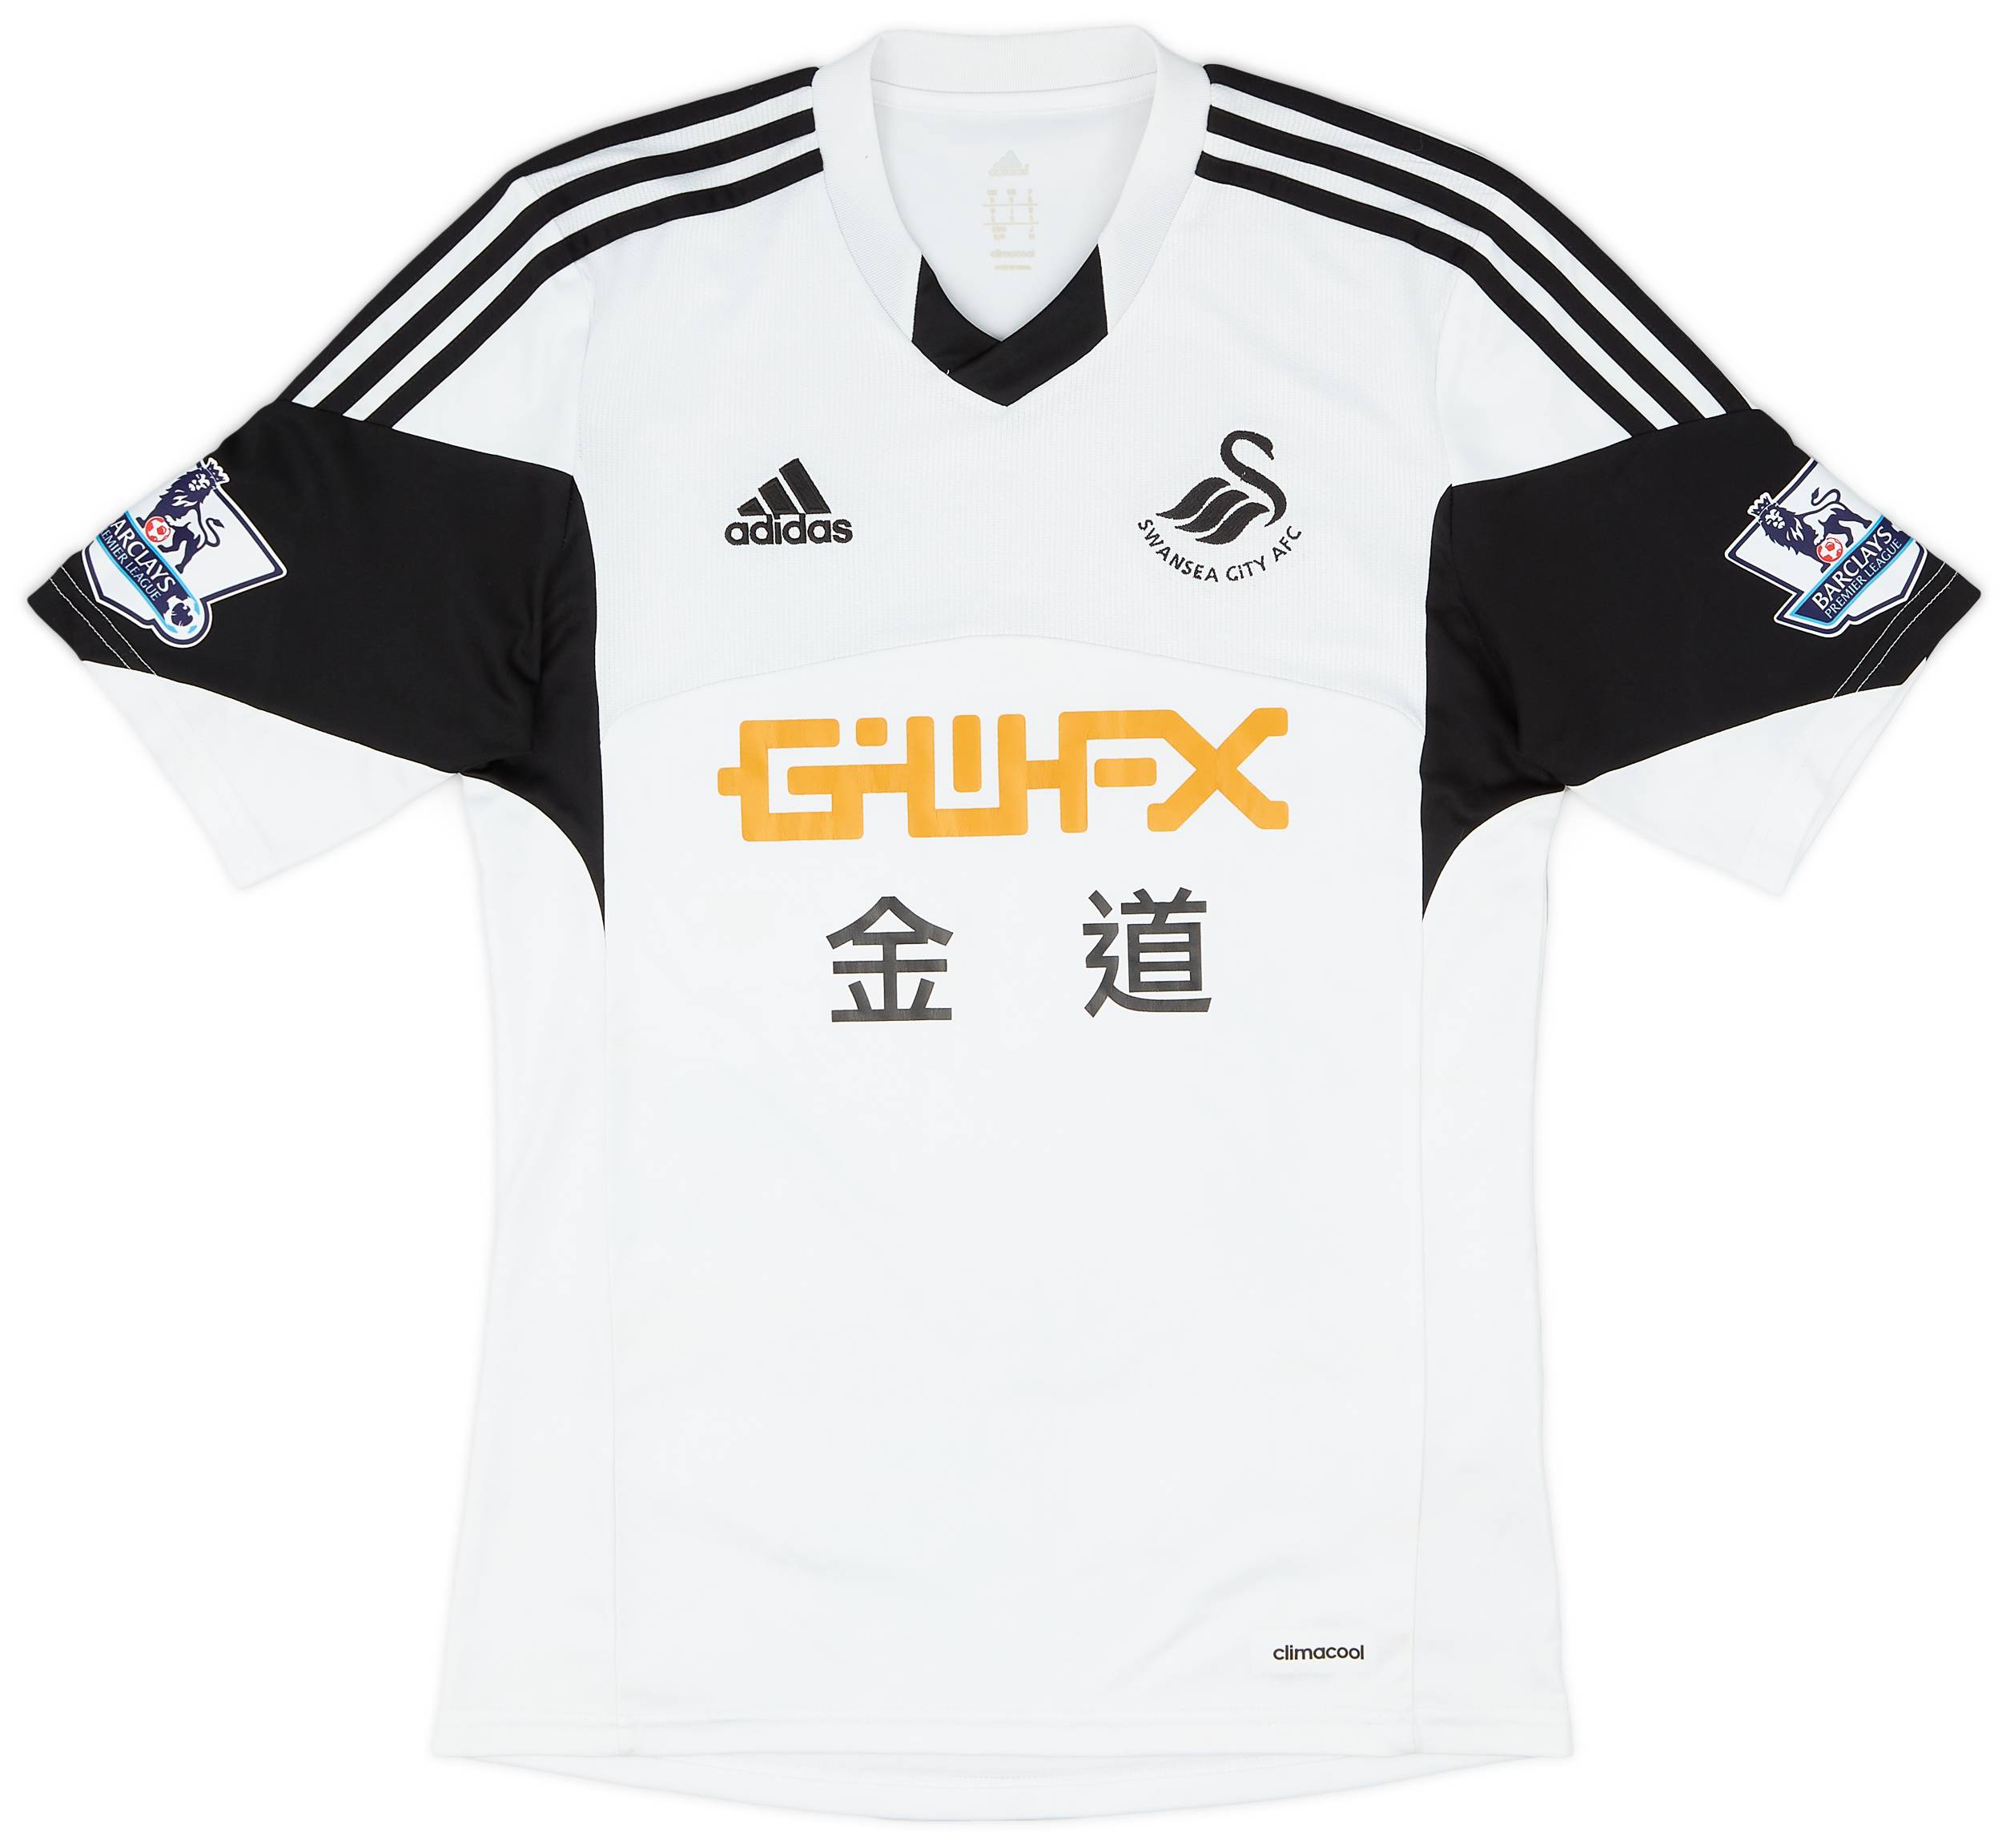 2013-14 Swansea Home Shirt - 7/10 - (S)